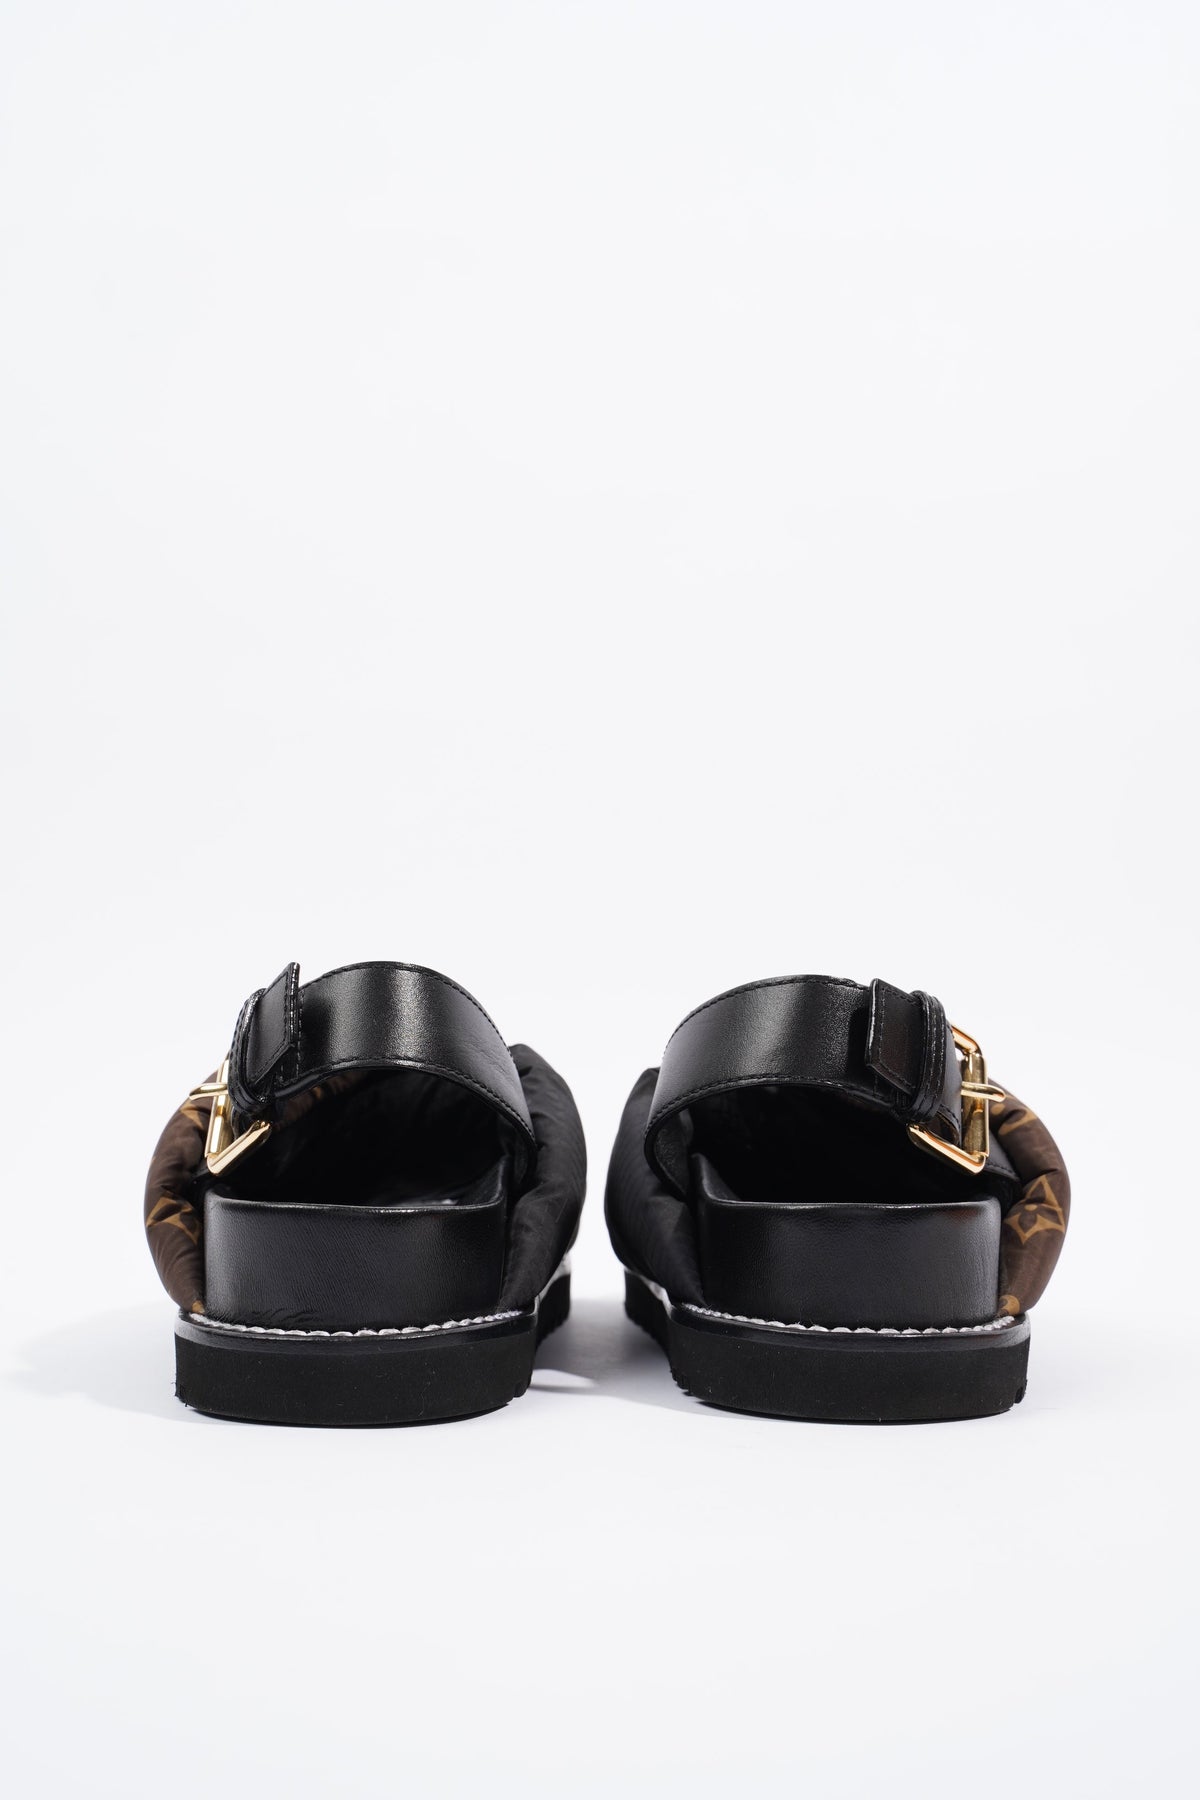 Louis Vuitton Paseo Flat Comfort Sandal BLACK. Size 37.0